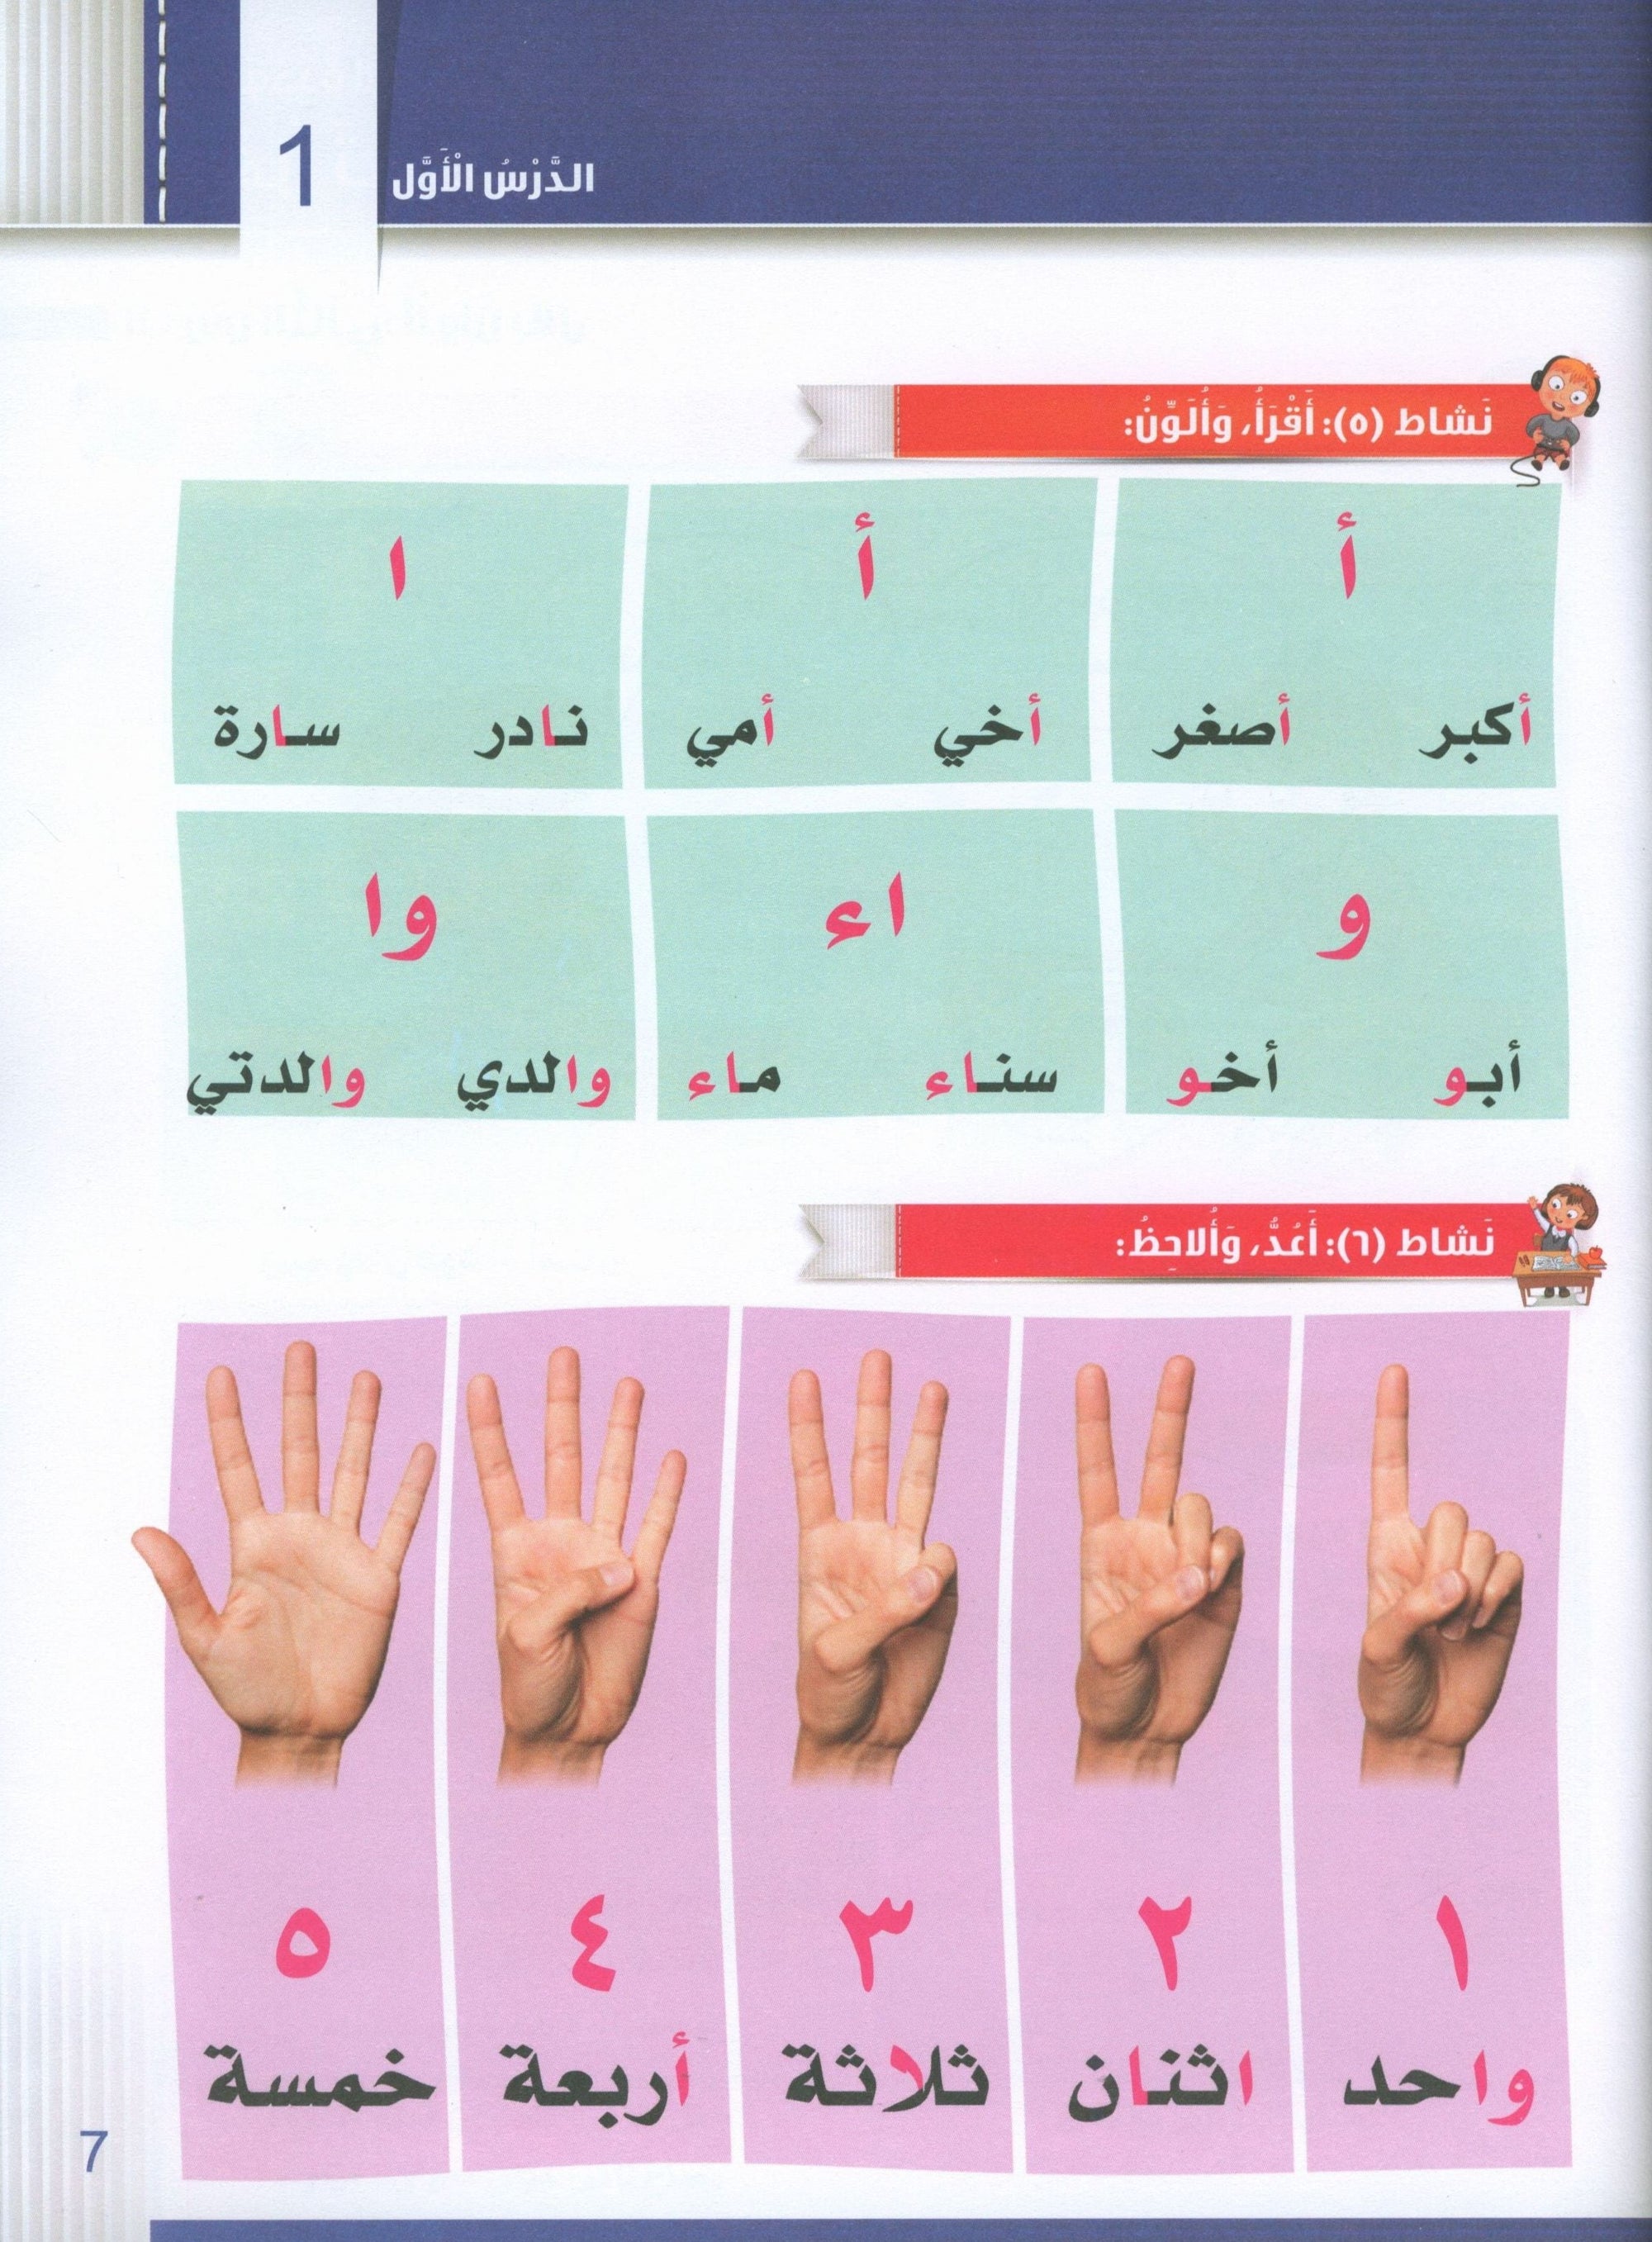 Itqan Series for Teaching Arabic Textbook (with Audio CD): KG2 سلسلة إتقان لتعليم اللغة العربية كتاب الطالب